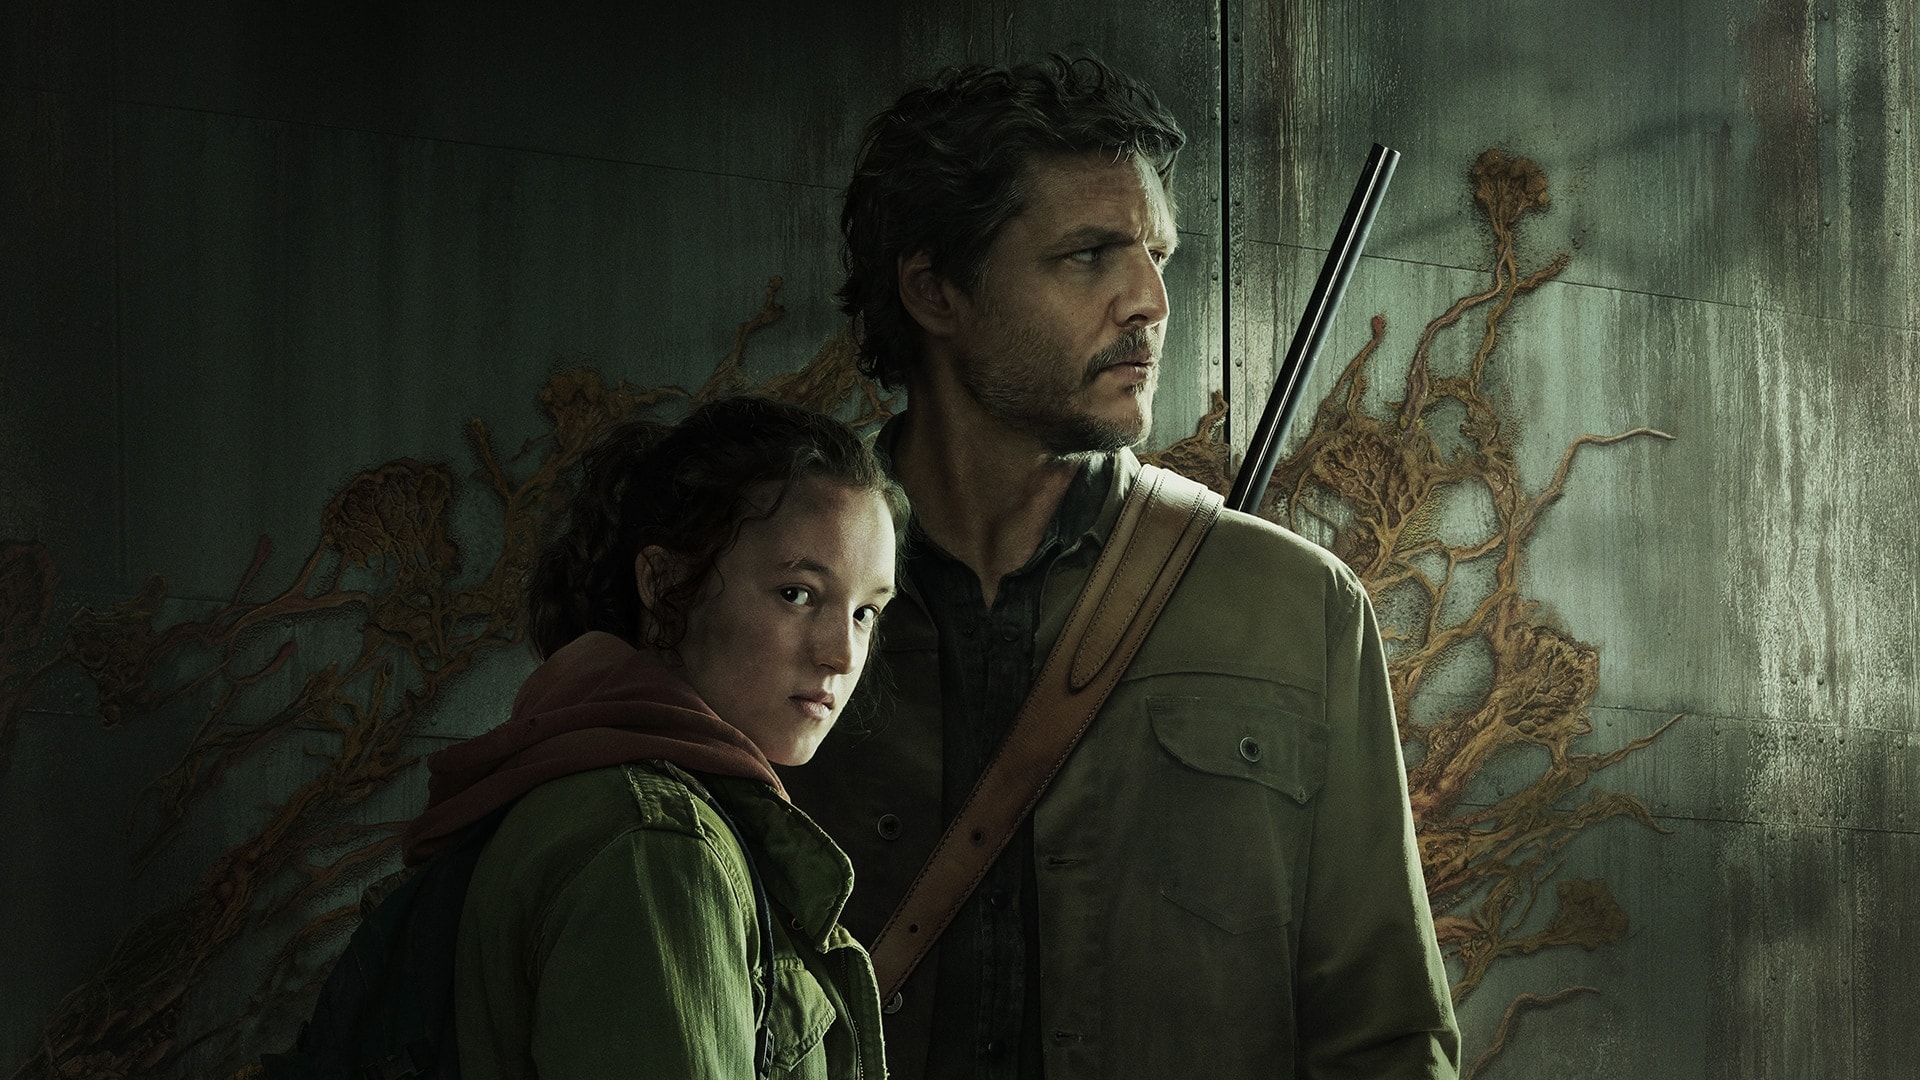 The Last Of Us Episode 3 Had Biggest Sunday Viewership Yet - GameSpot